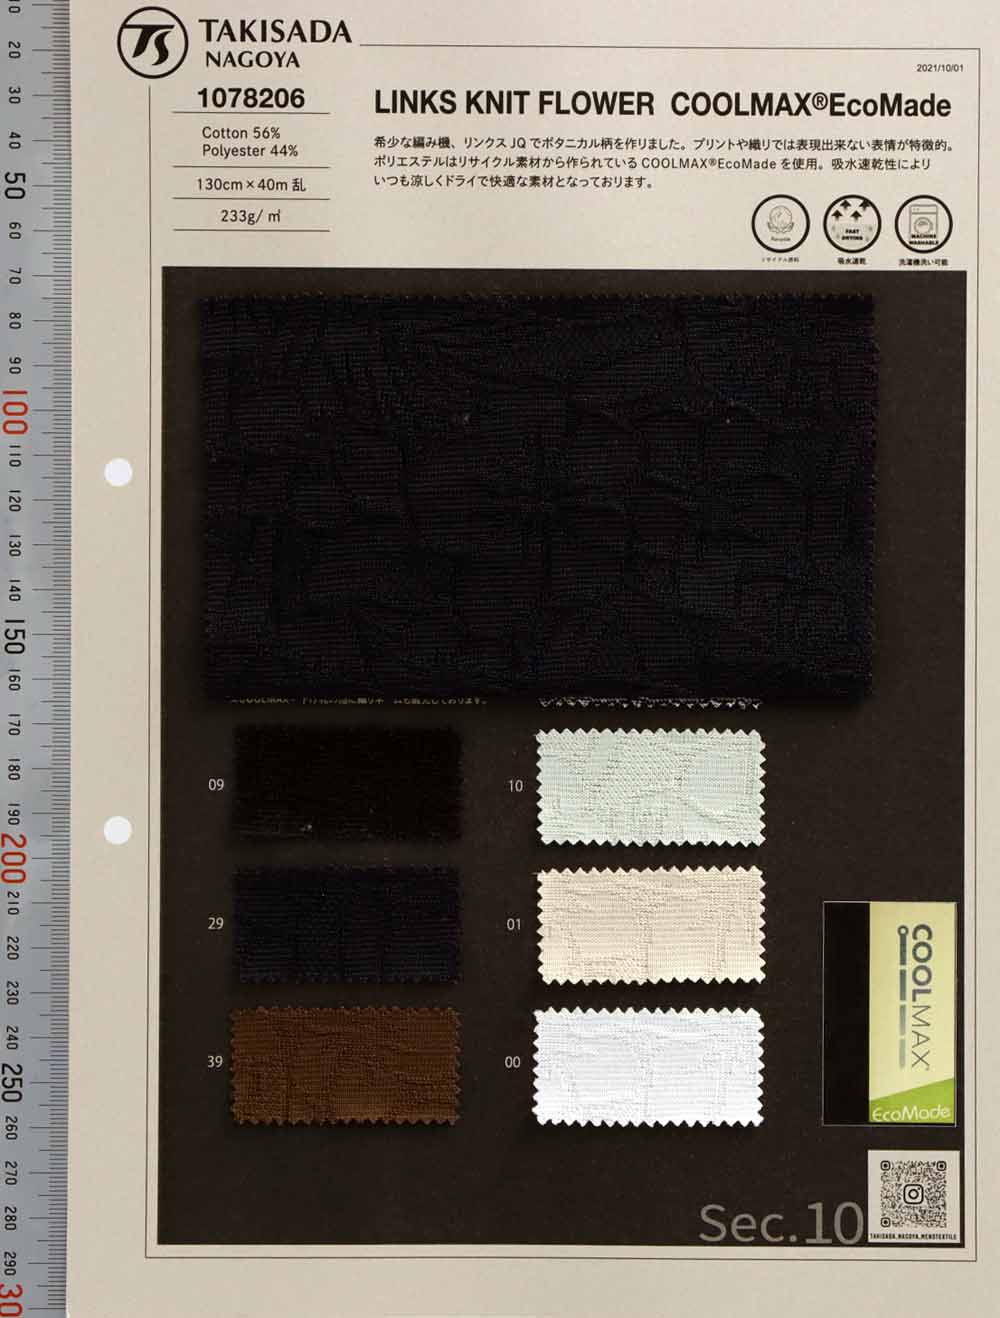 1078206 LINKSSTRICK BLUME COOLMAX® EcoMade[Textilgewebe] Takisada Nagoya